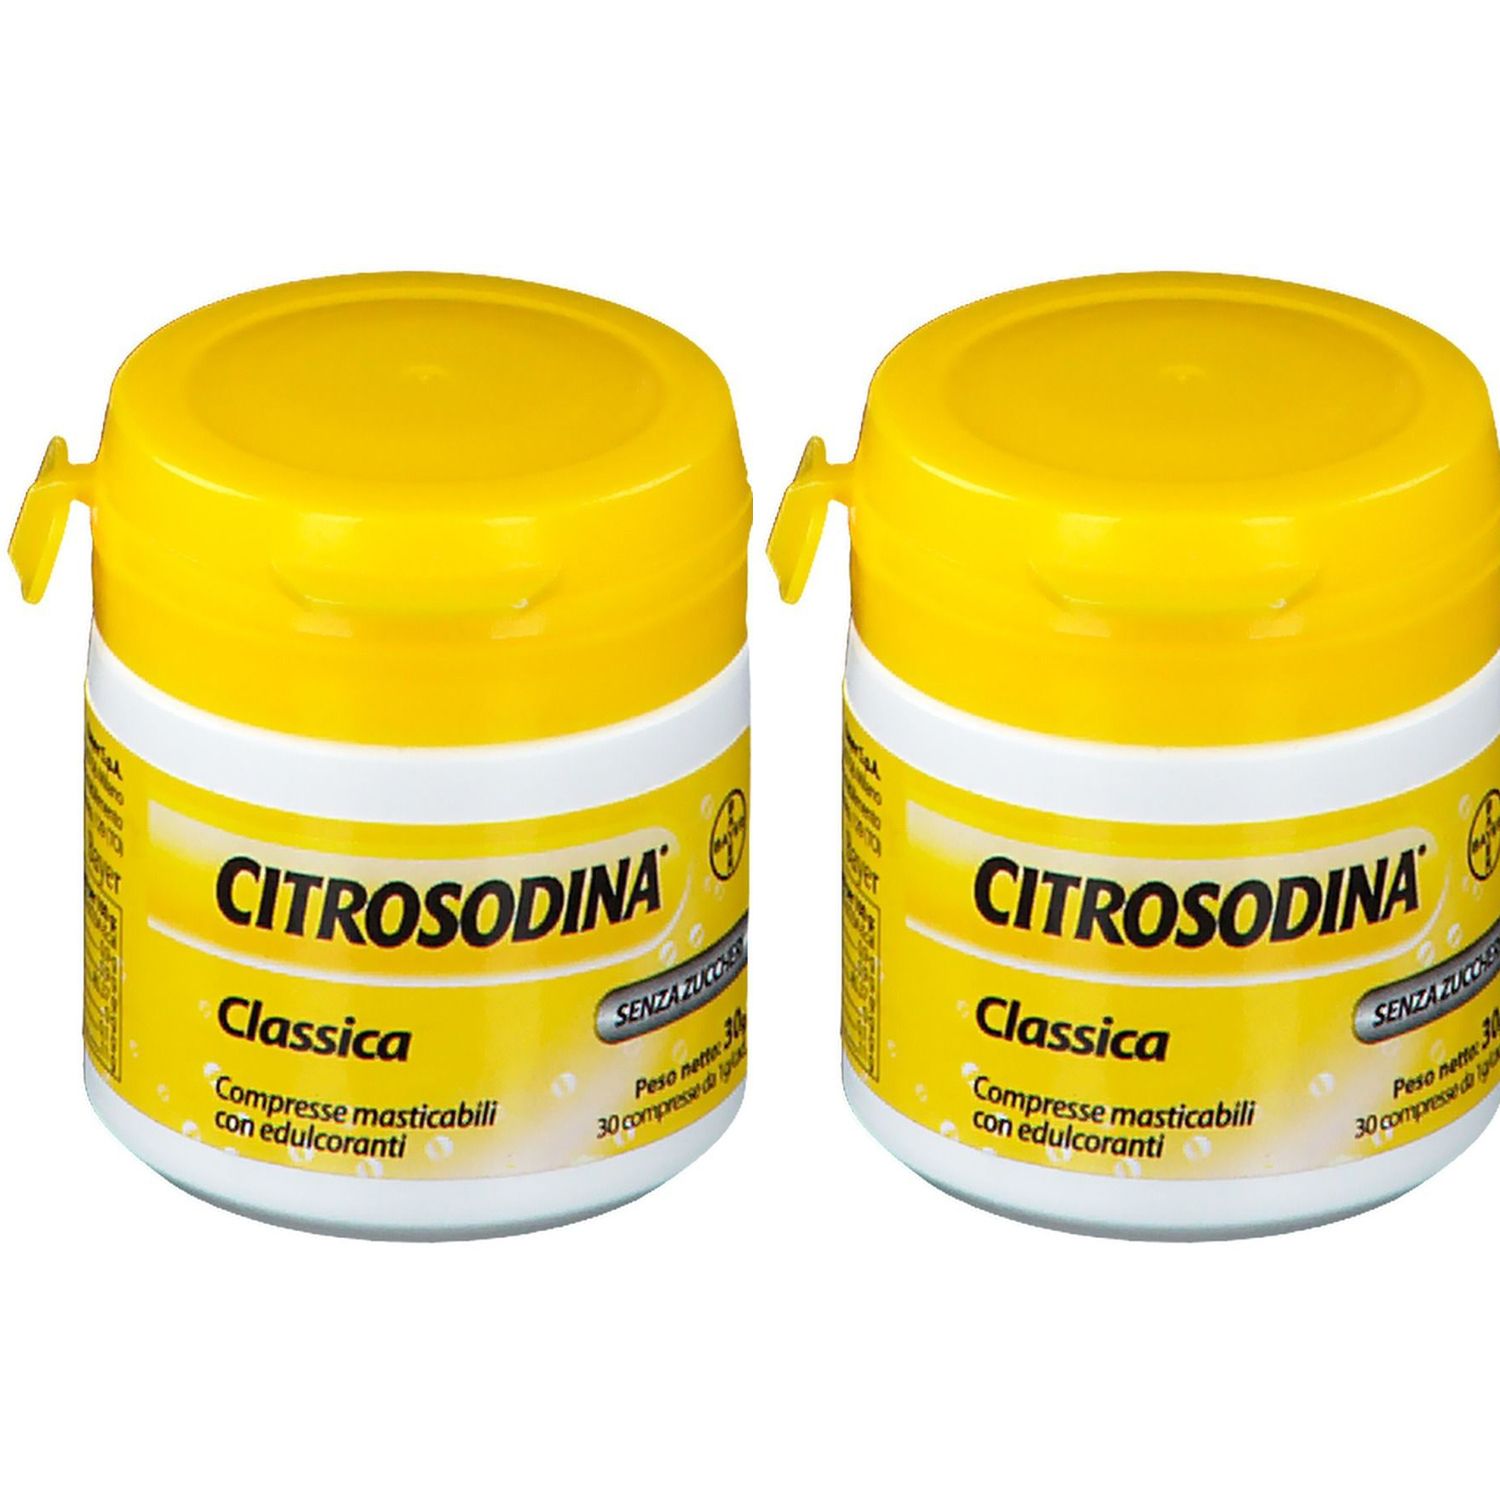 Image of Citrosodina Classica Digestivo Compresse Masticabili Limone